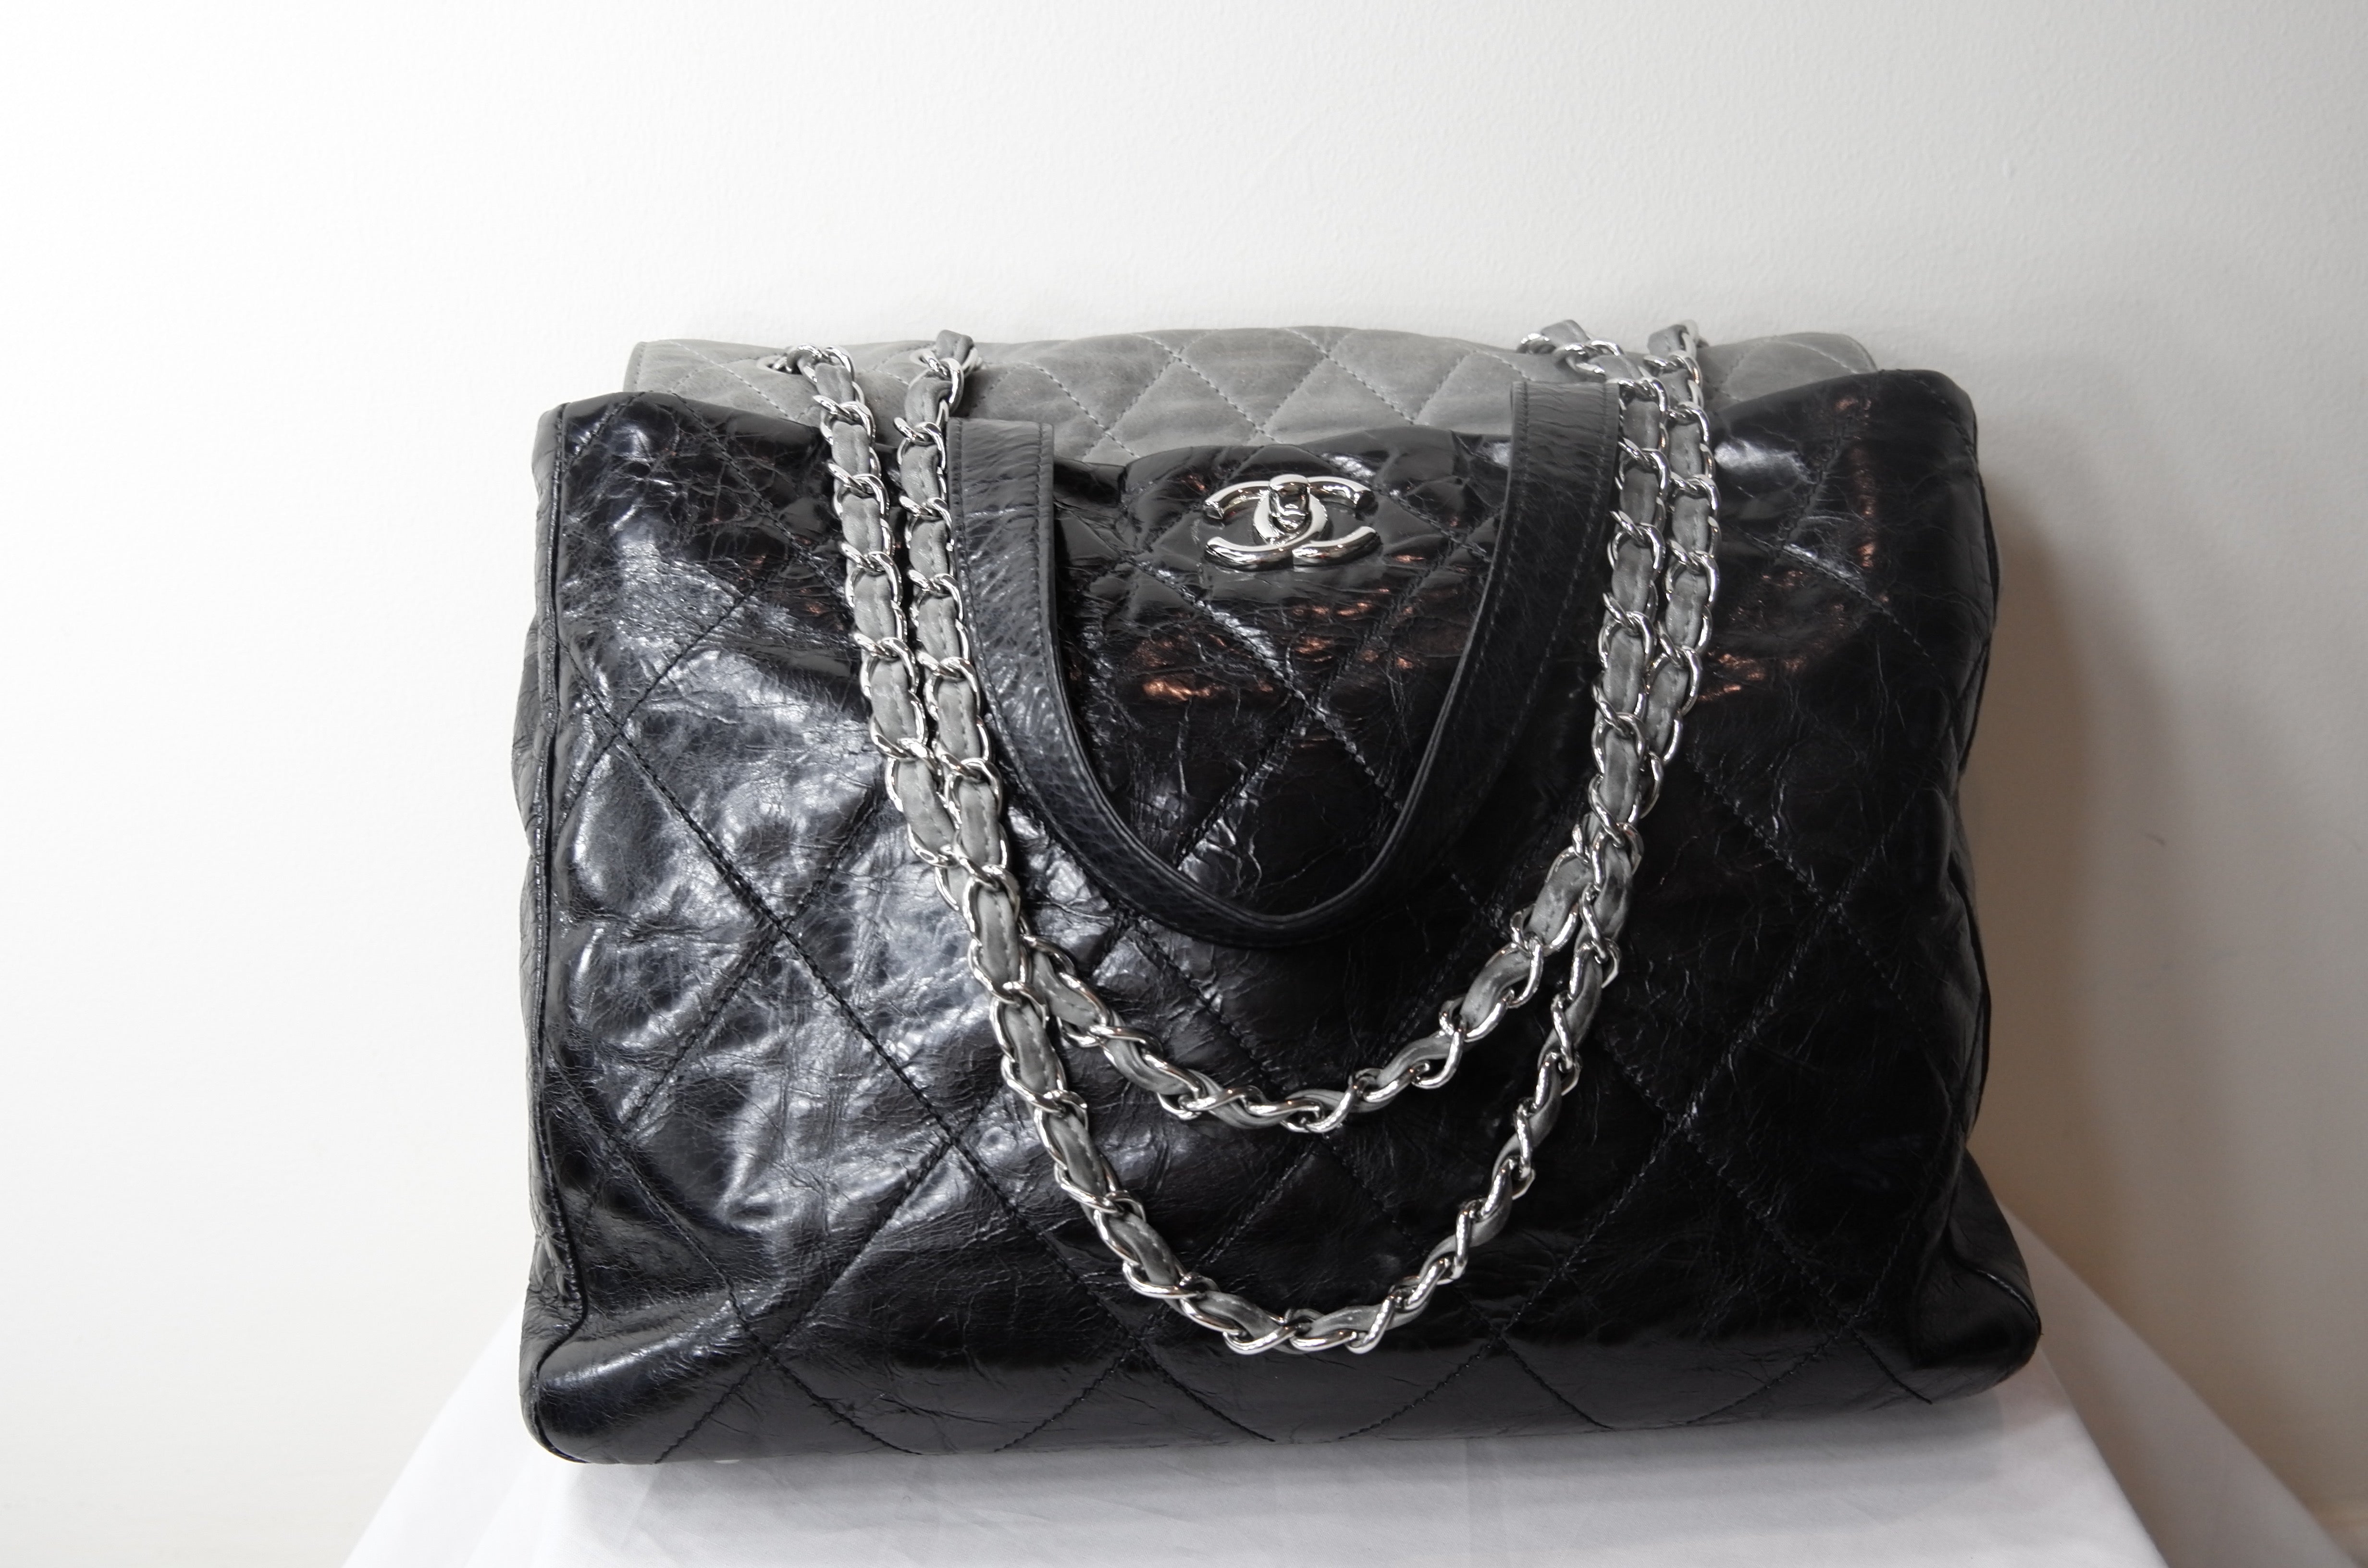 Chanel Portobello Handbag in Grey/ Black leather